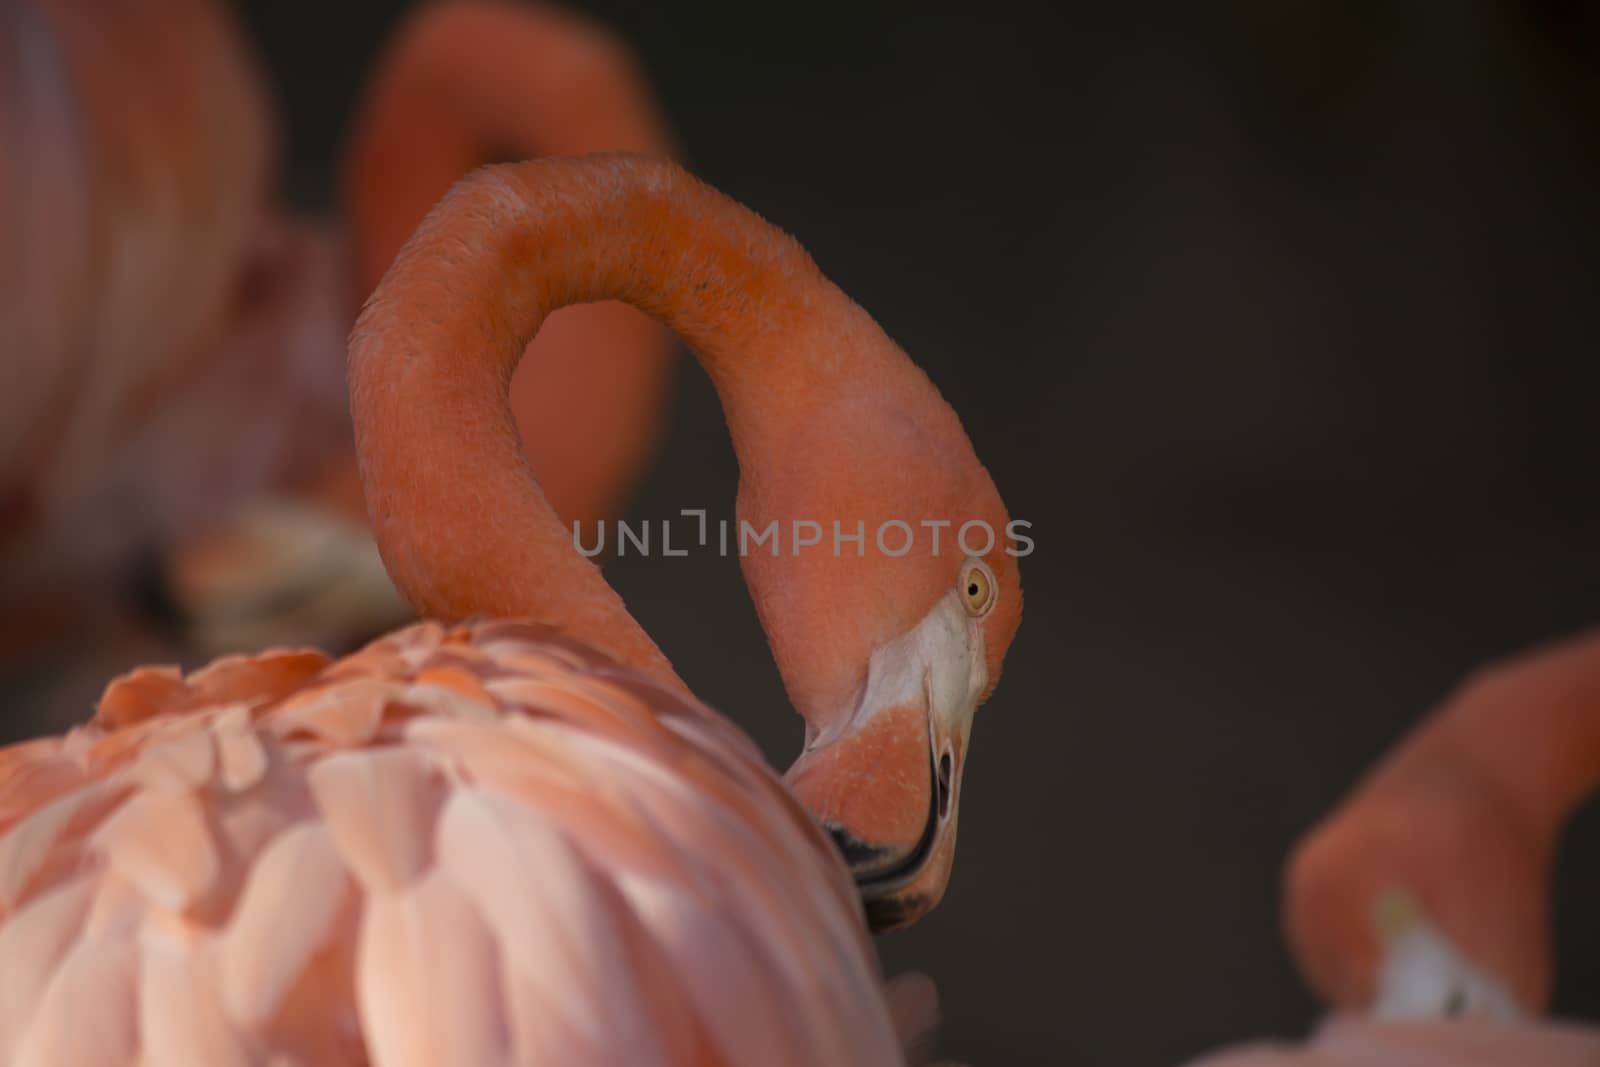 Flamingos grooming